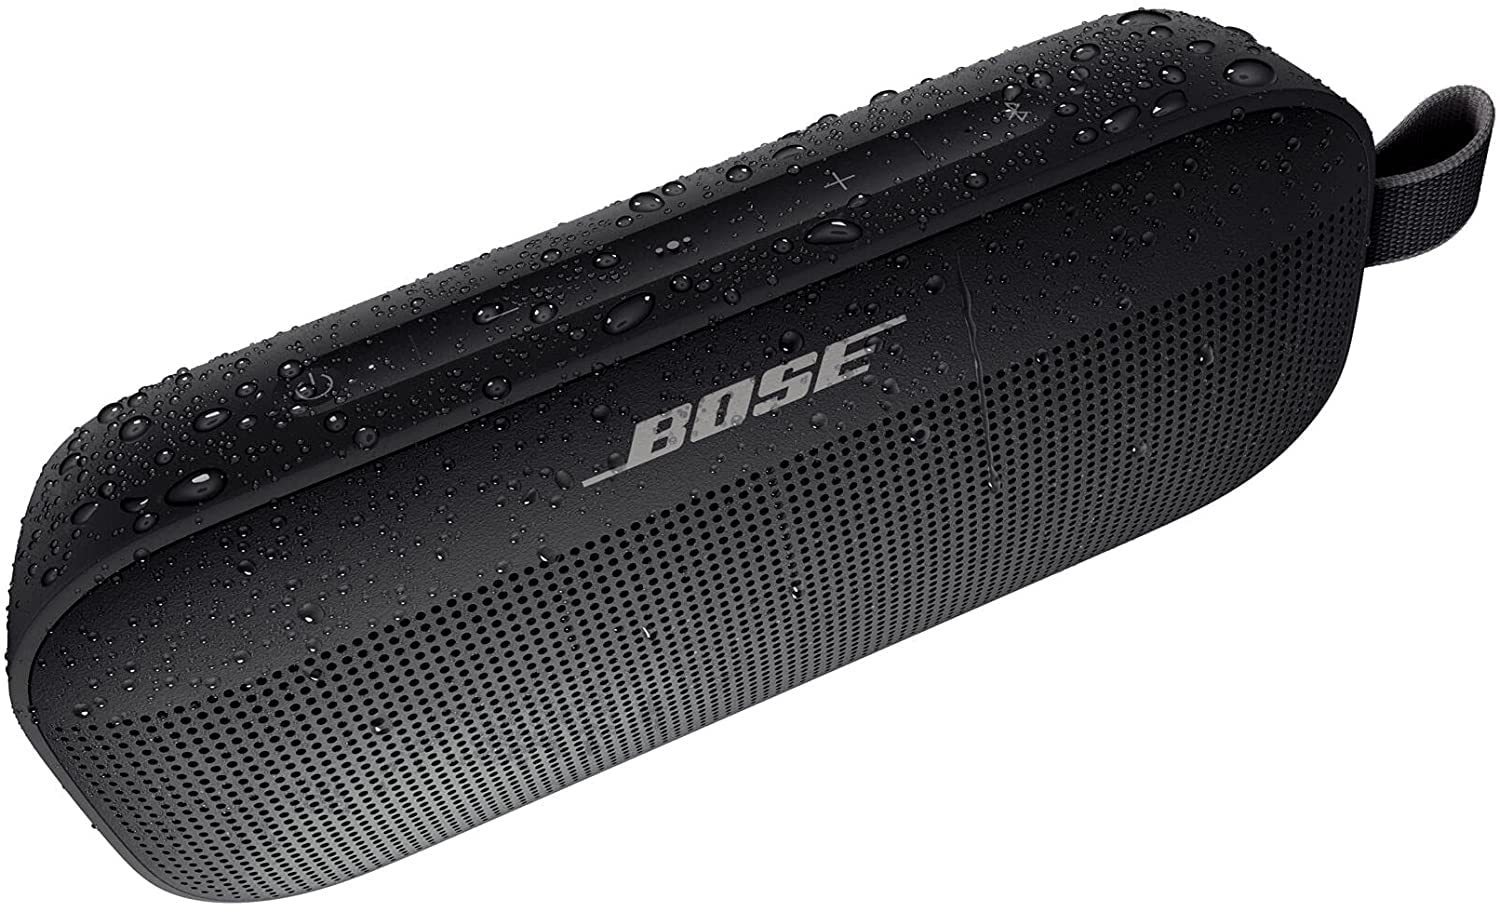 Bose SoundLink Flex Bluetooth Portable Speaker, Wireless Waterproof Speaker for Outdoor Travel - Black (Renewed)